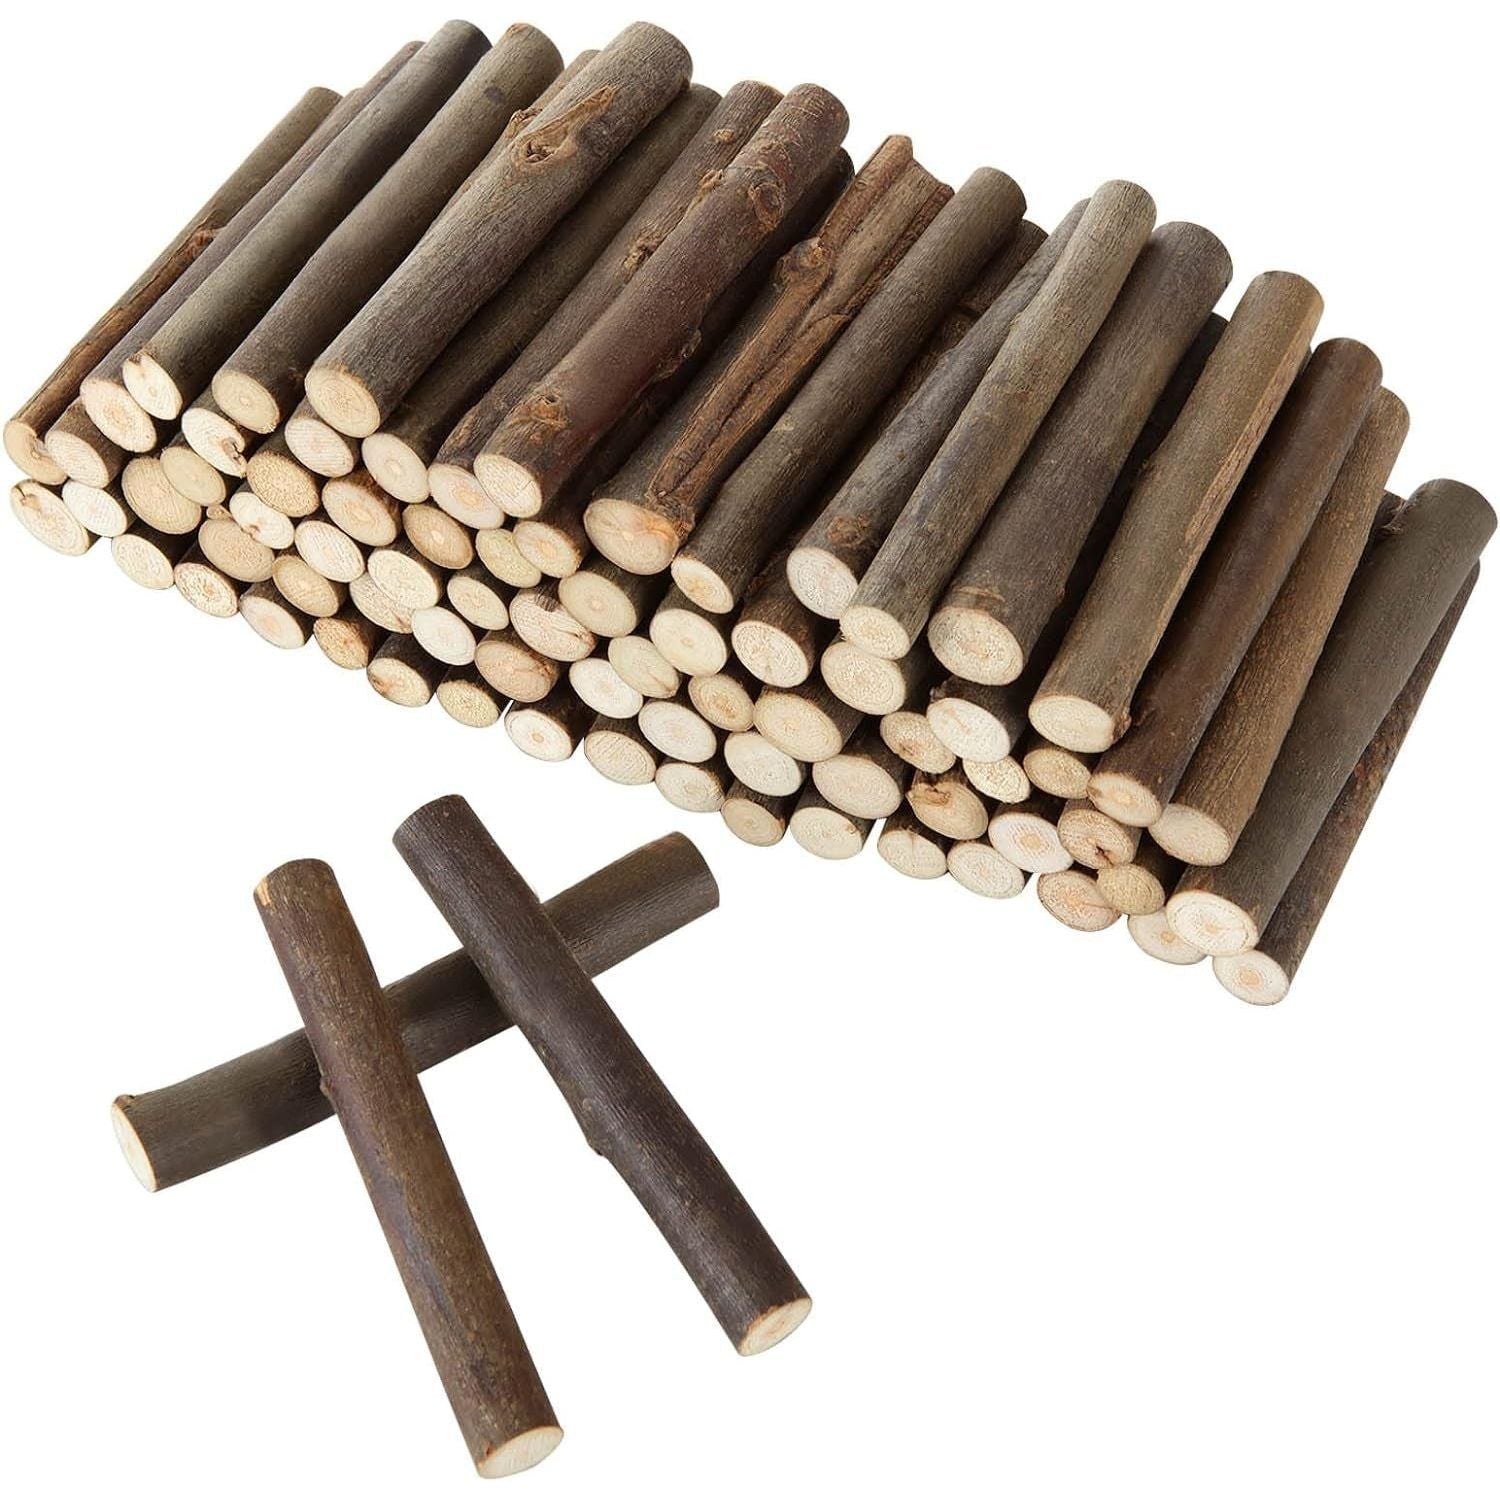 4 Inch Wood Log Sticks